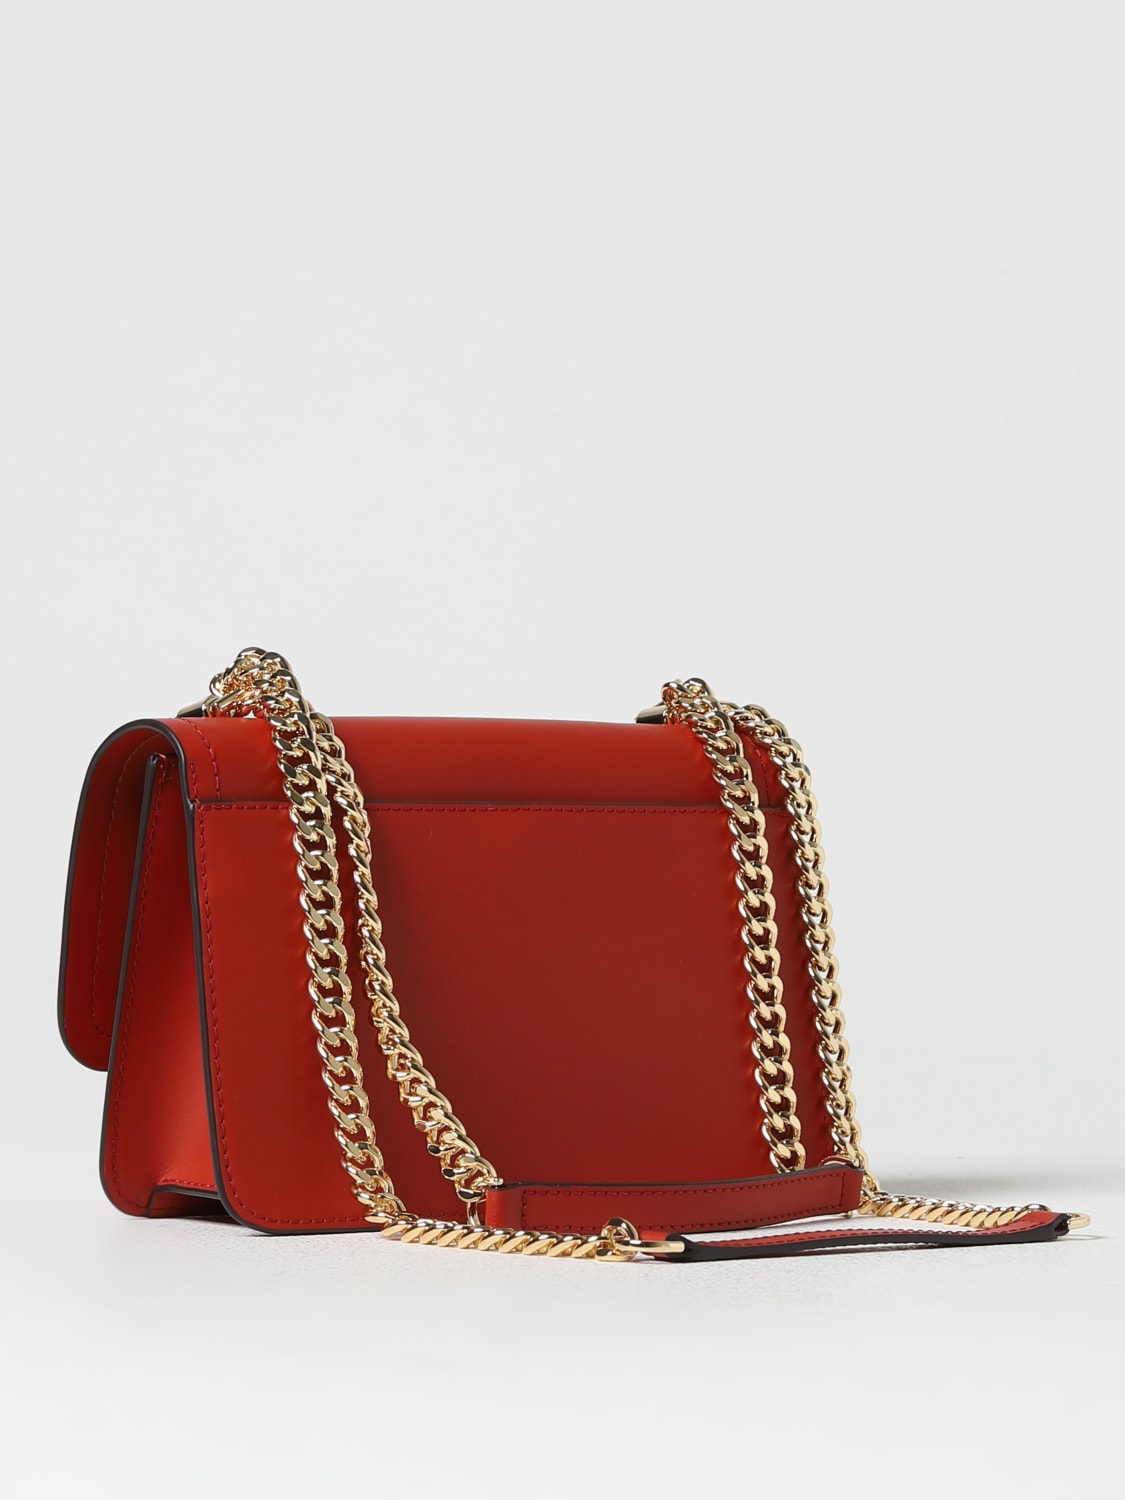 Michael Kors, Bags, Michael Kors Red Handbag Purse Gold Chain